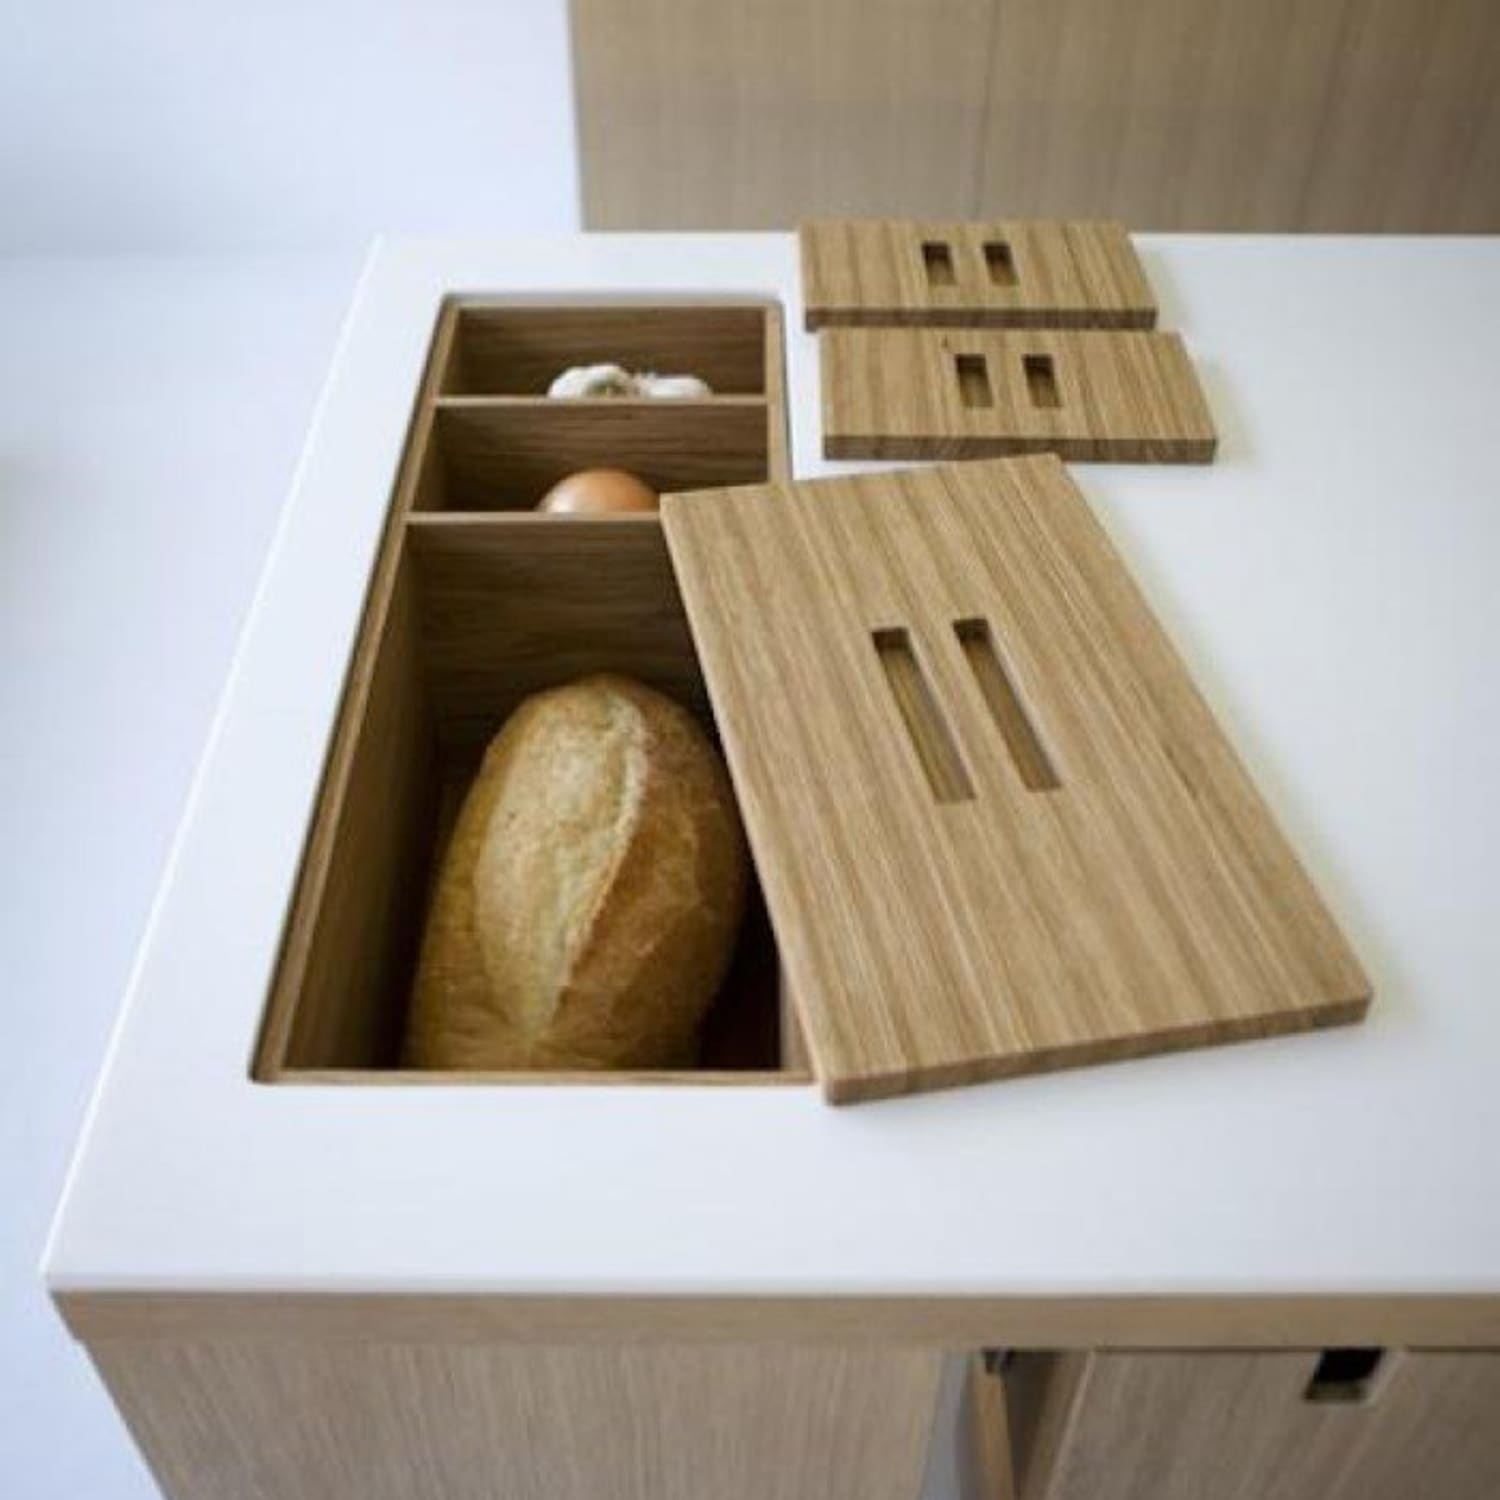 Aha! Design: A Compost Bin Built Into the Kitchen Counter